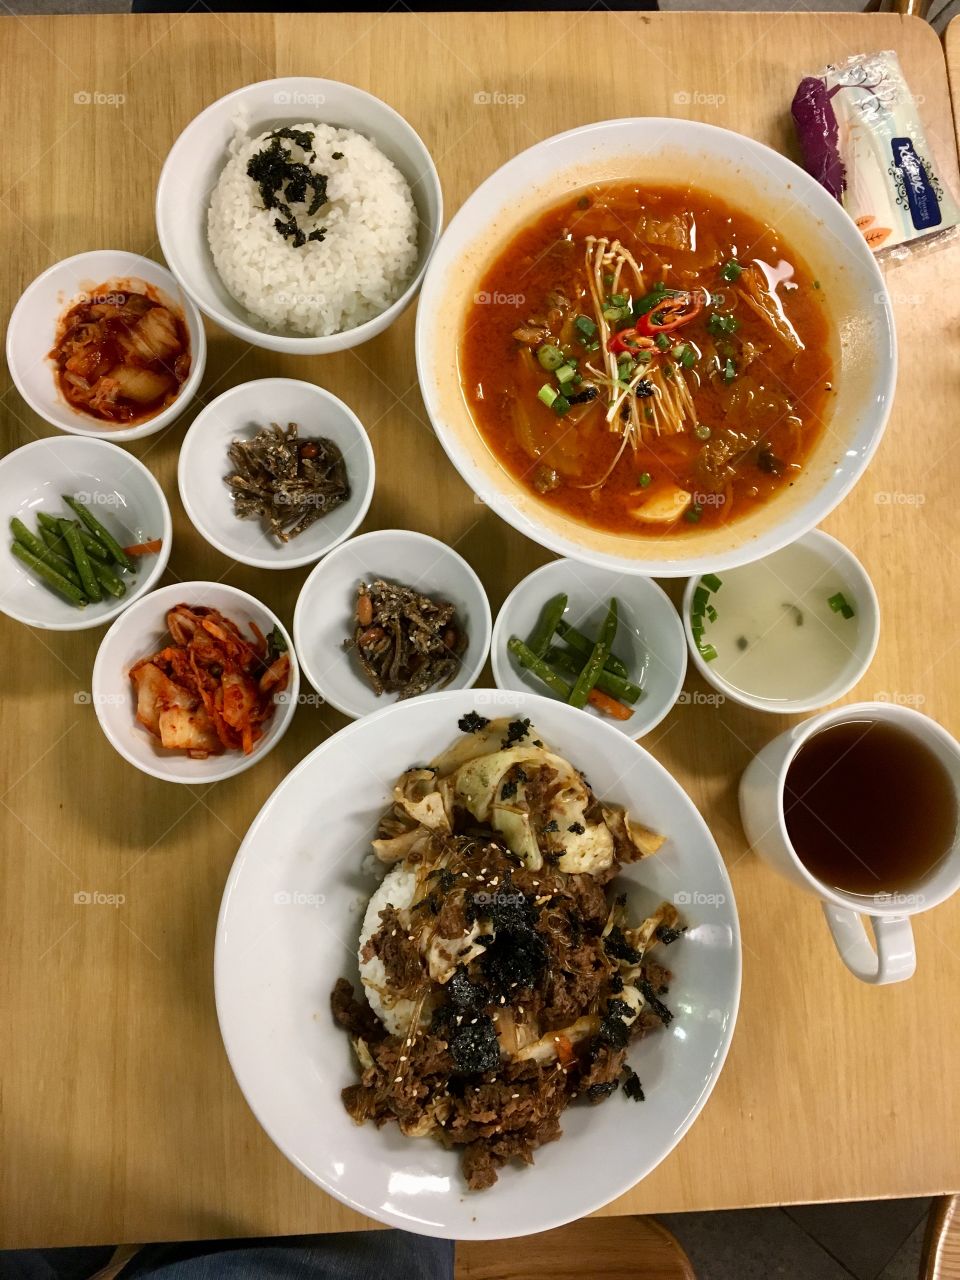 Beef with rice and kimchi jiggae